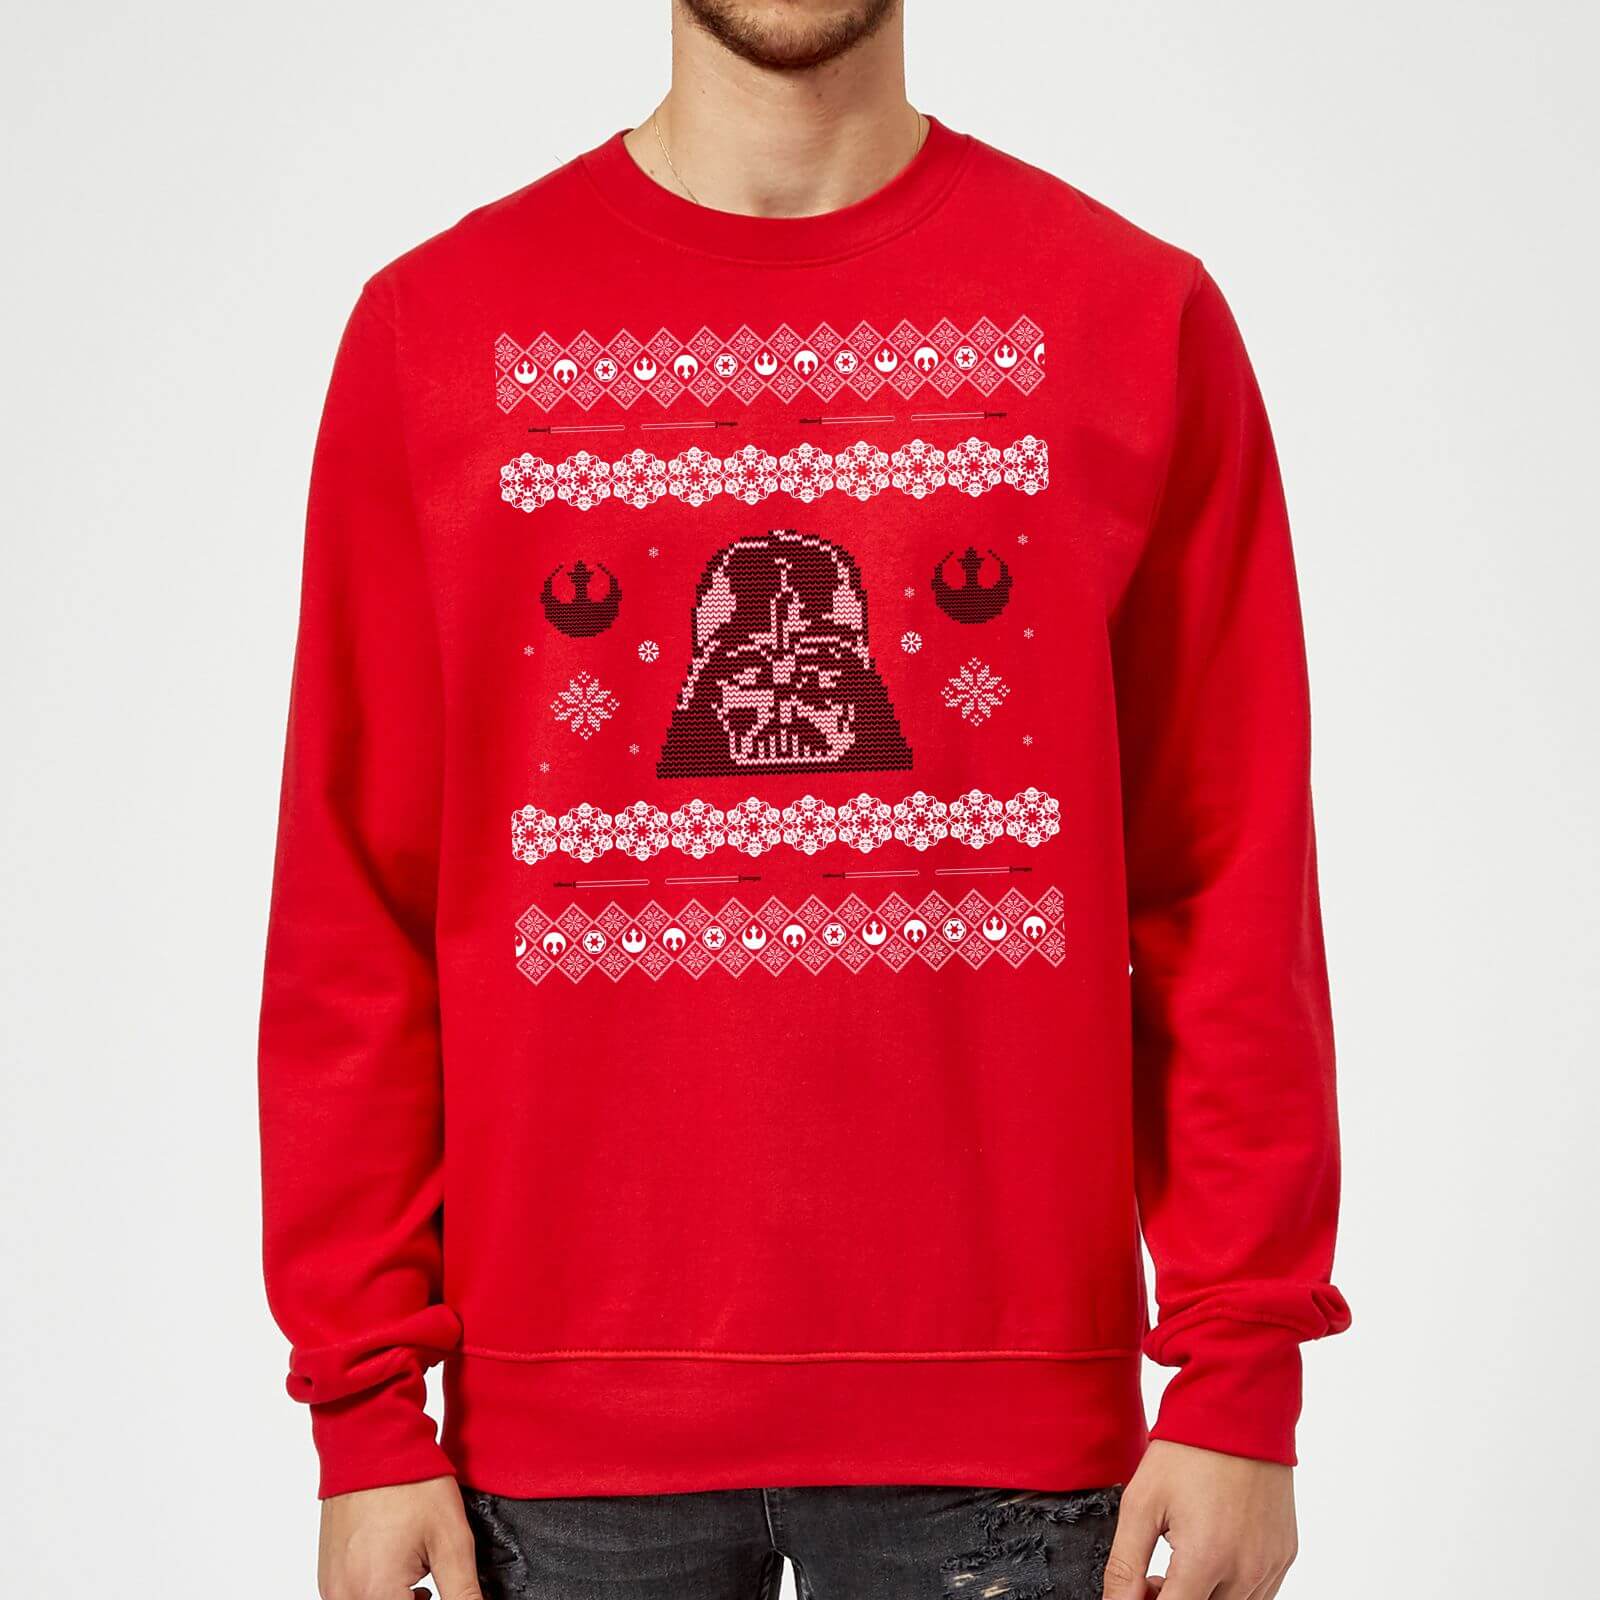 Star Wars Darth Vader Christmas Knit Pull de Noel - Rouge - S